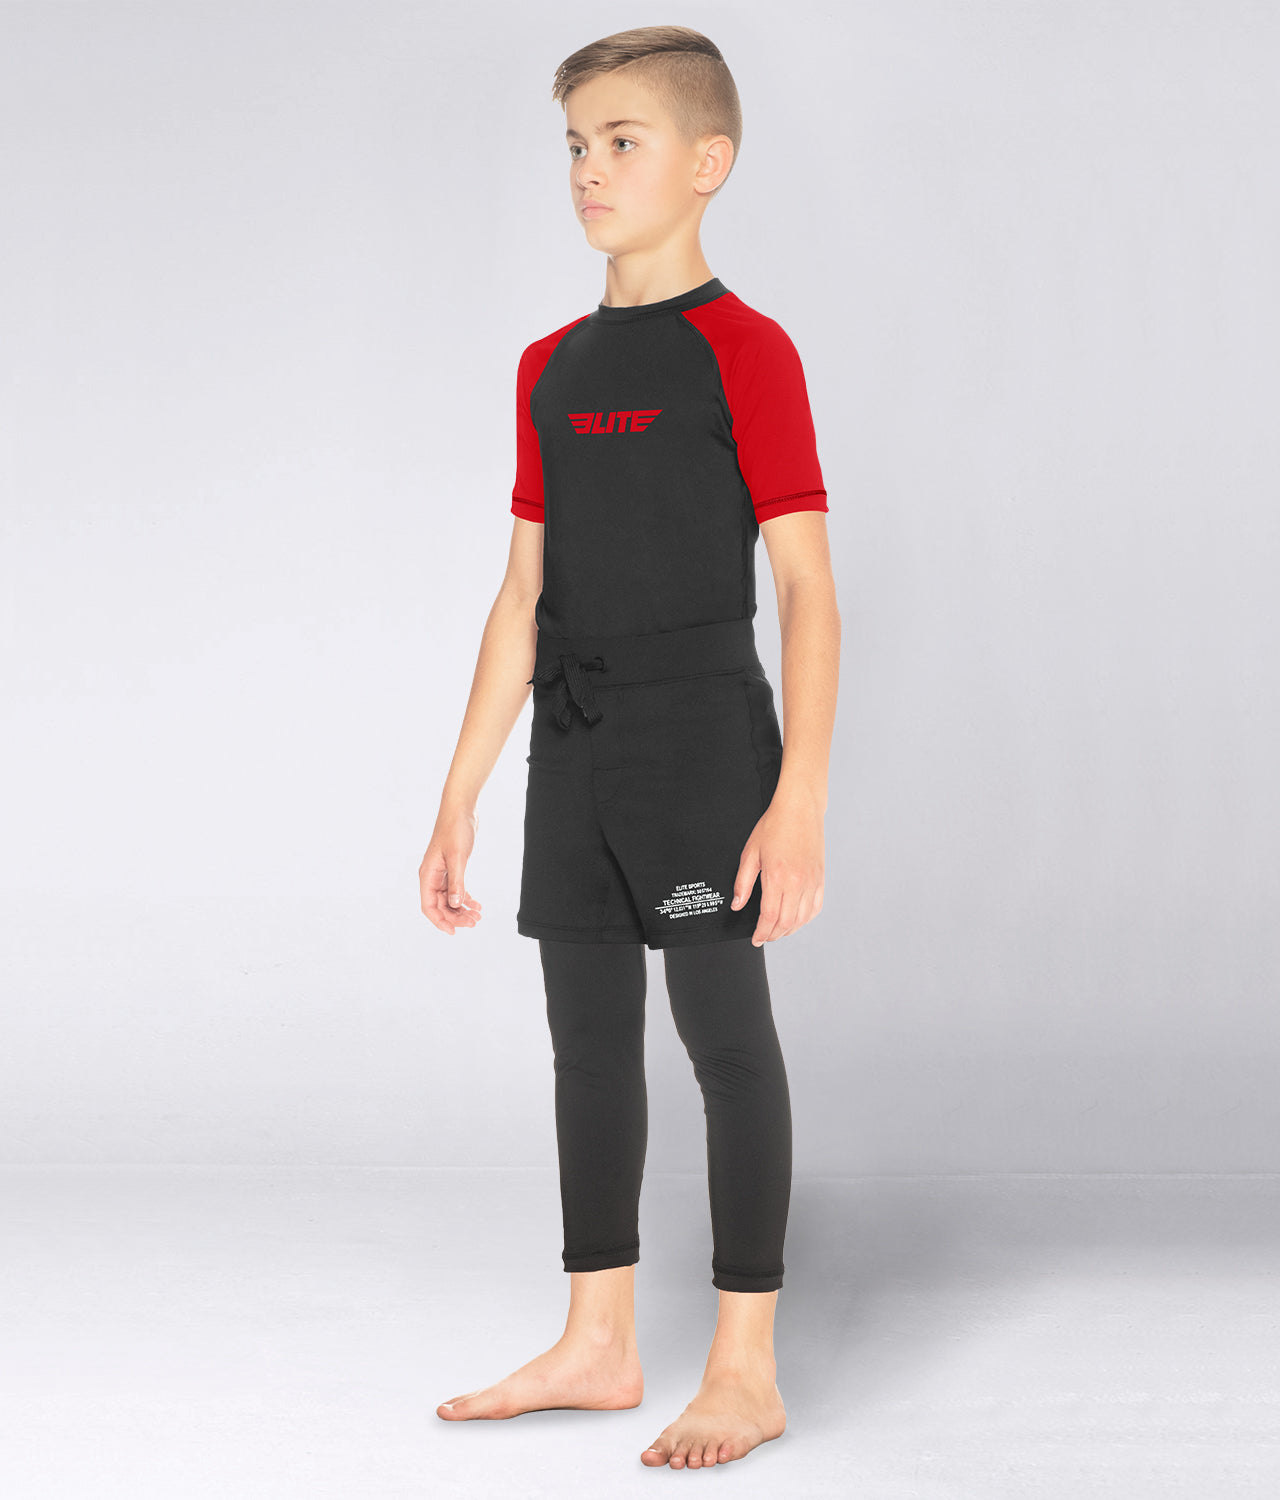 Kids' Standard Red Short Sleeve Training Rash Guard